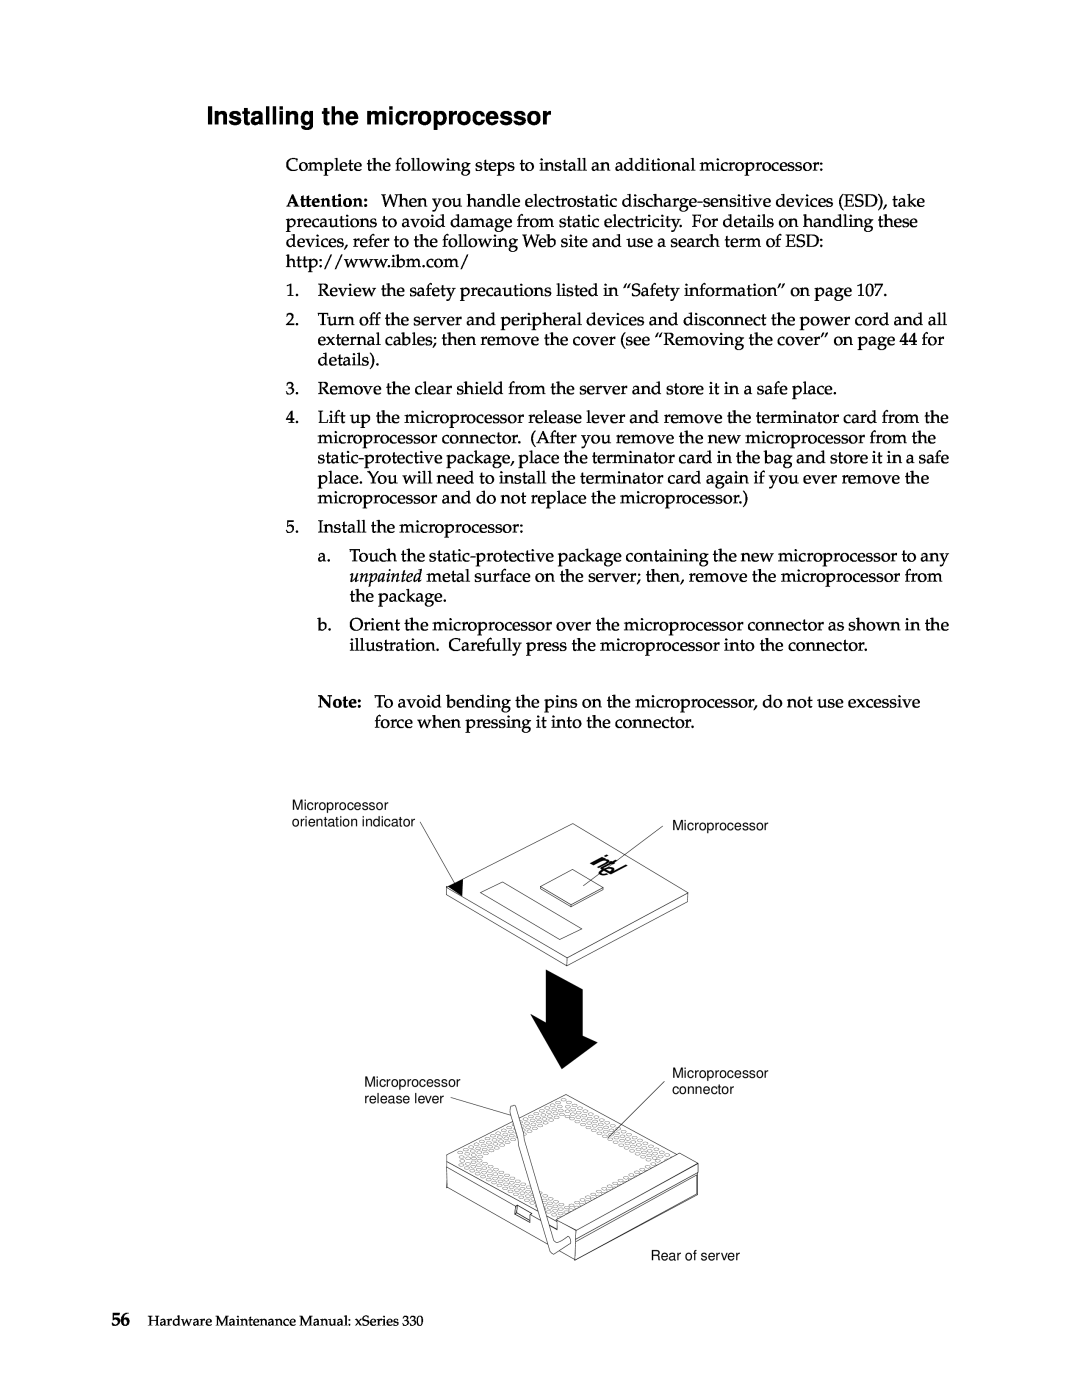 IBM xSeries 330 manual Installing the microprocessor 